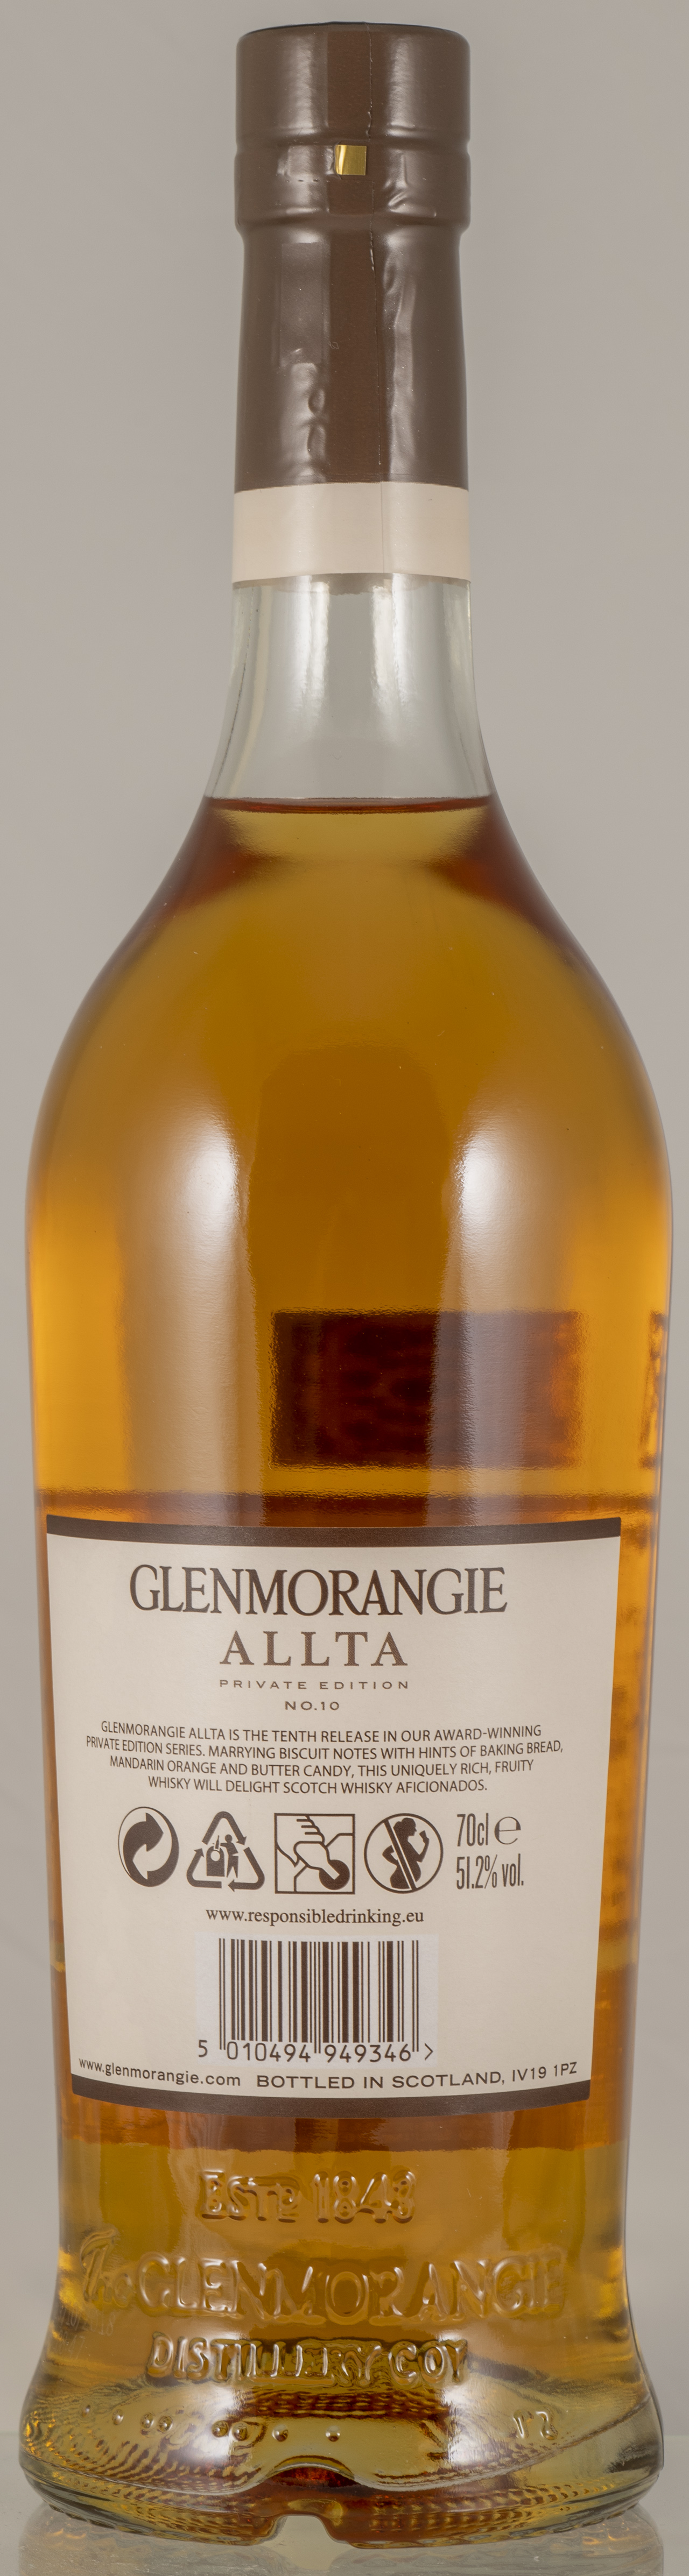 Billede: PHC_7079 - Glenmorangie Allta Private Edition No 10 - bottle back.jpg